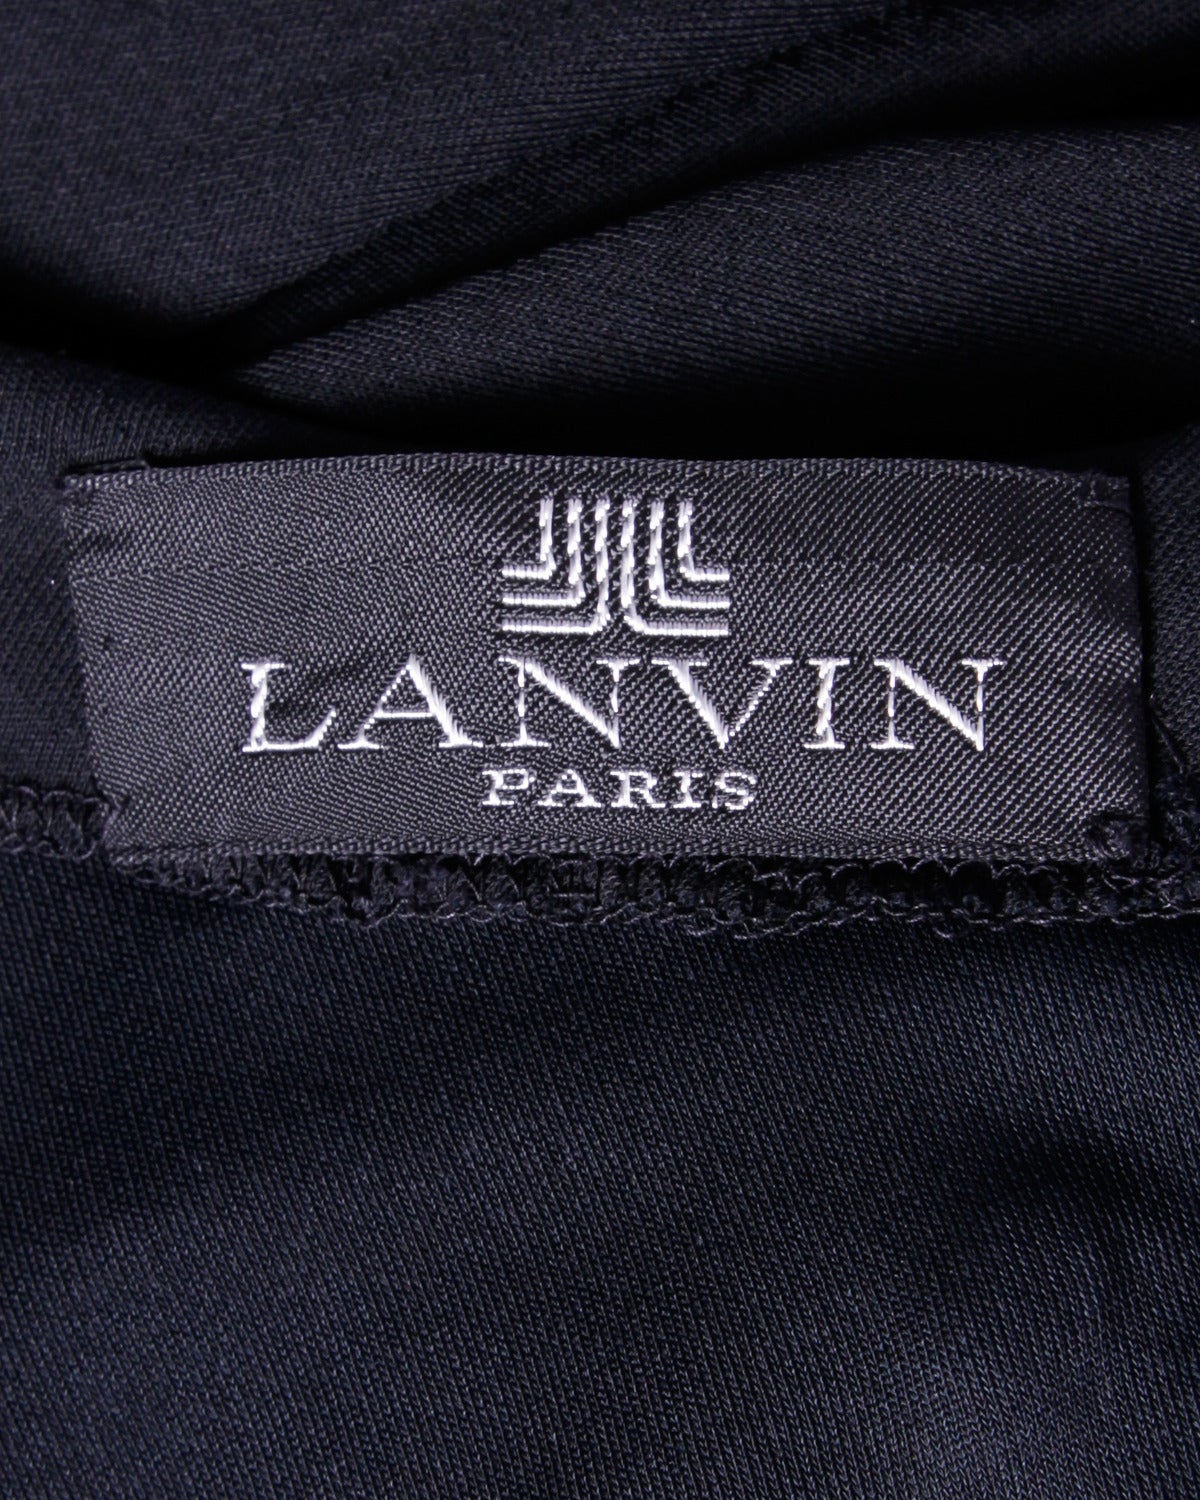 Lanvin Black Label Vintage 1970s 70s Op Art Geometric Print Maxi Dress ...